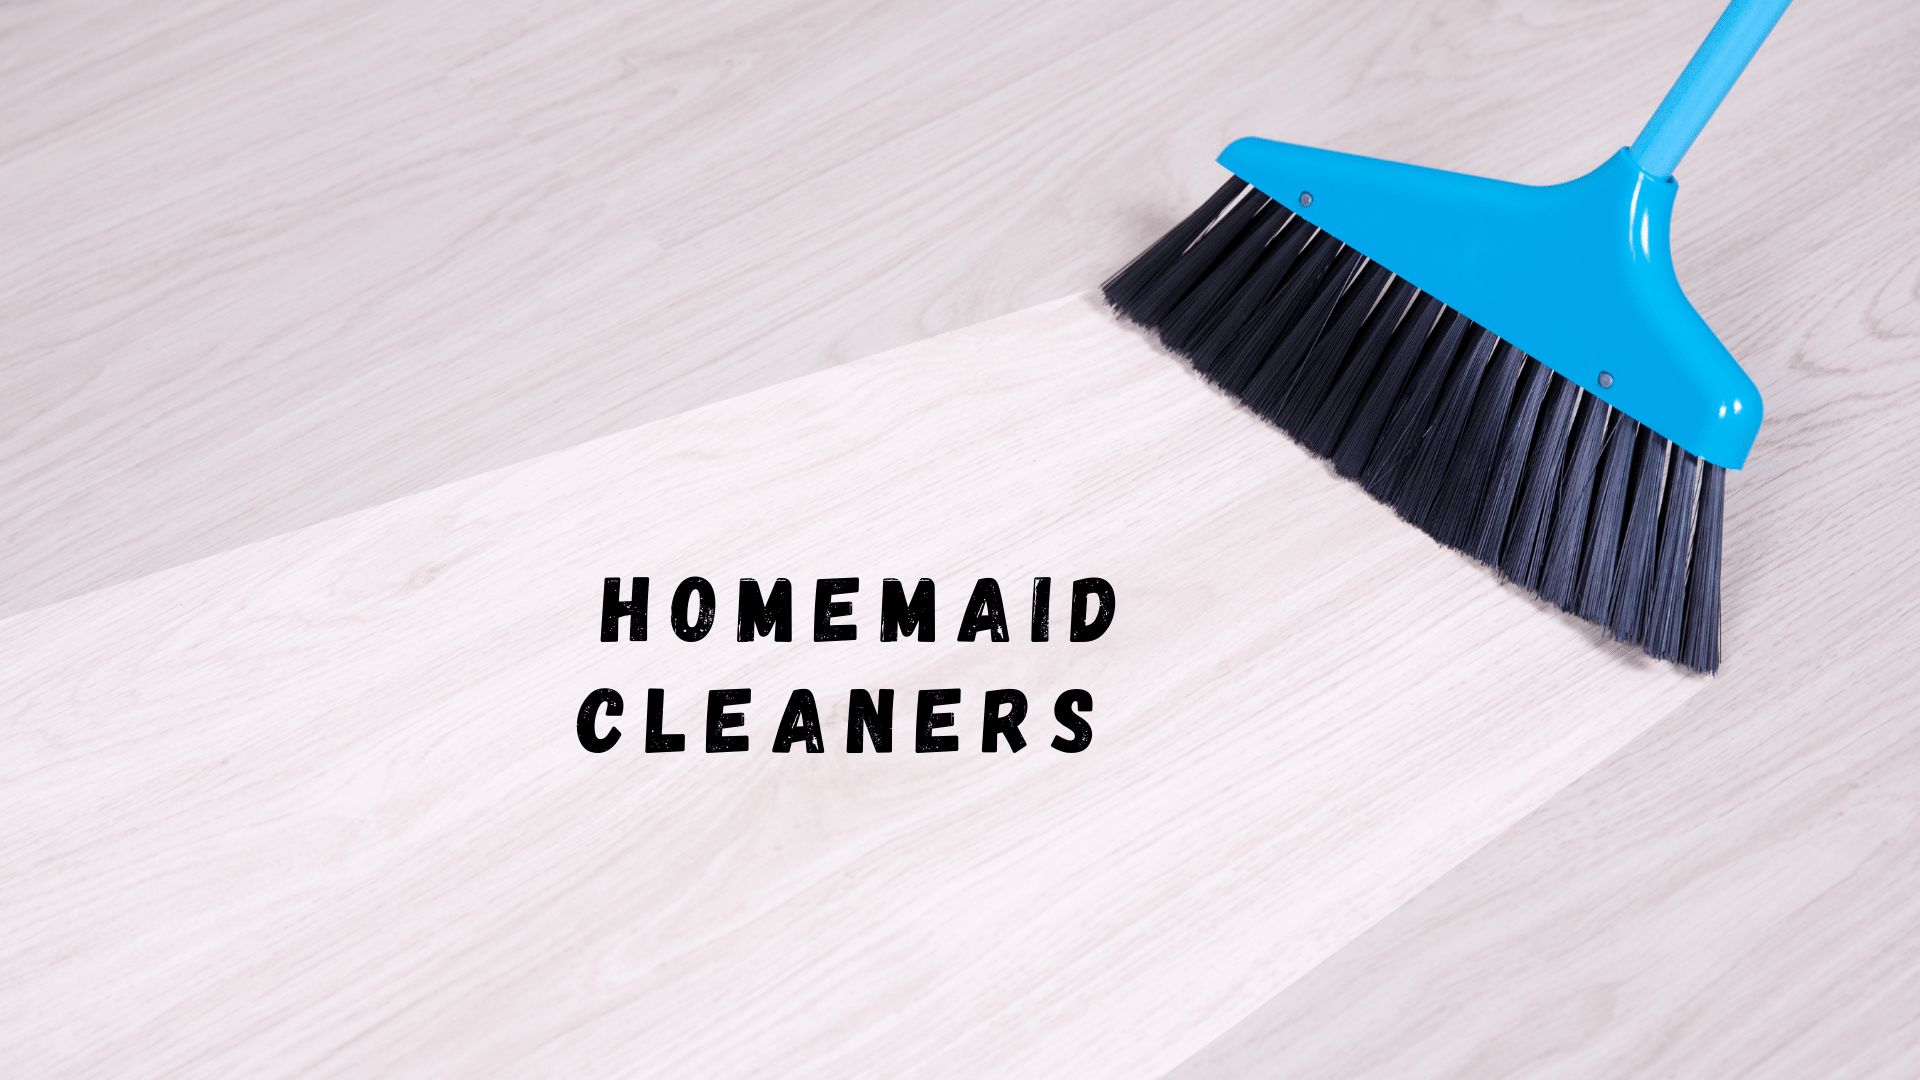 HomeMaid Cleaners